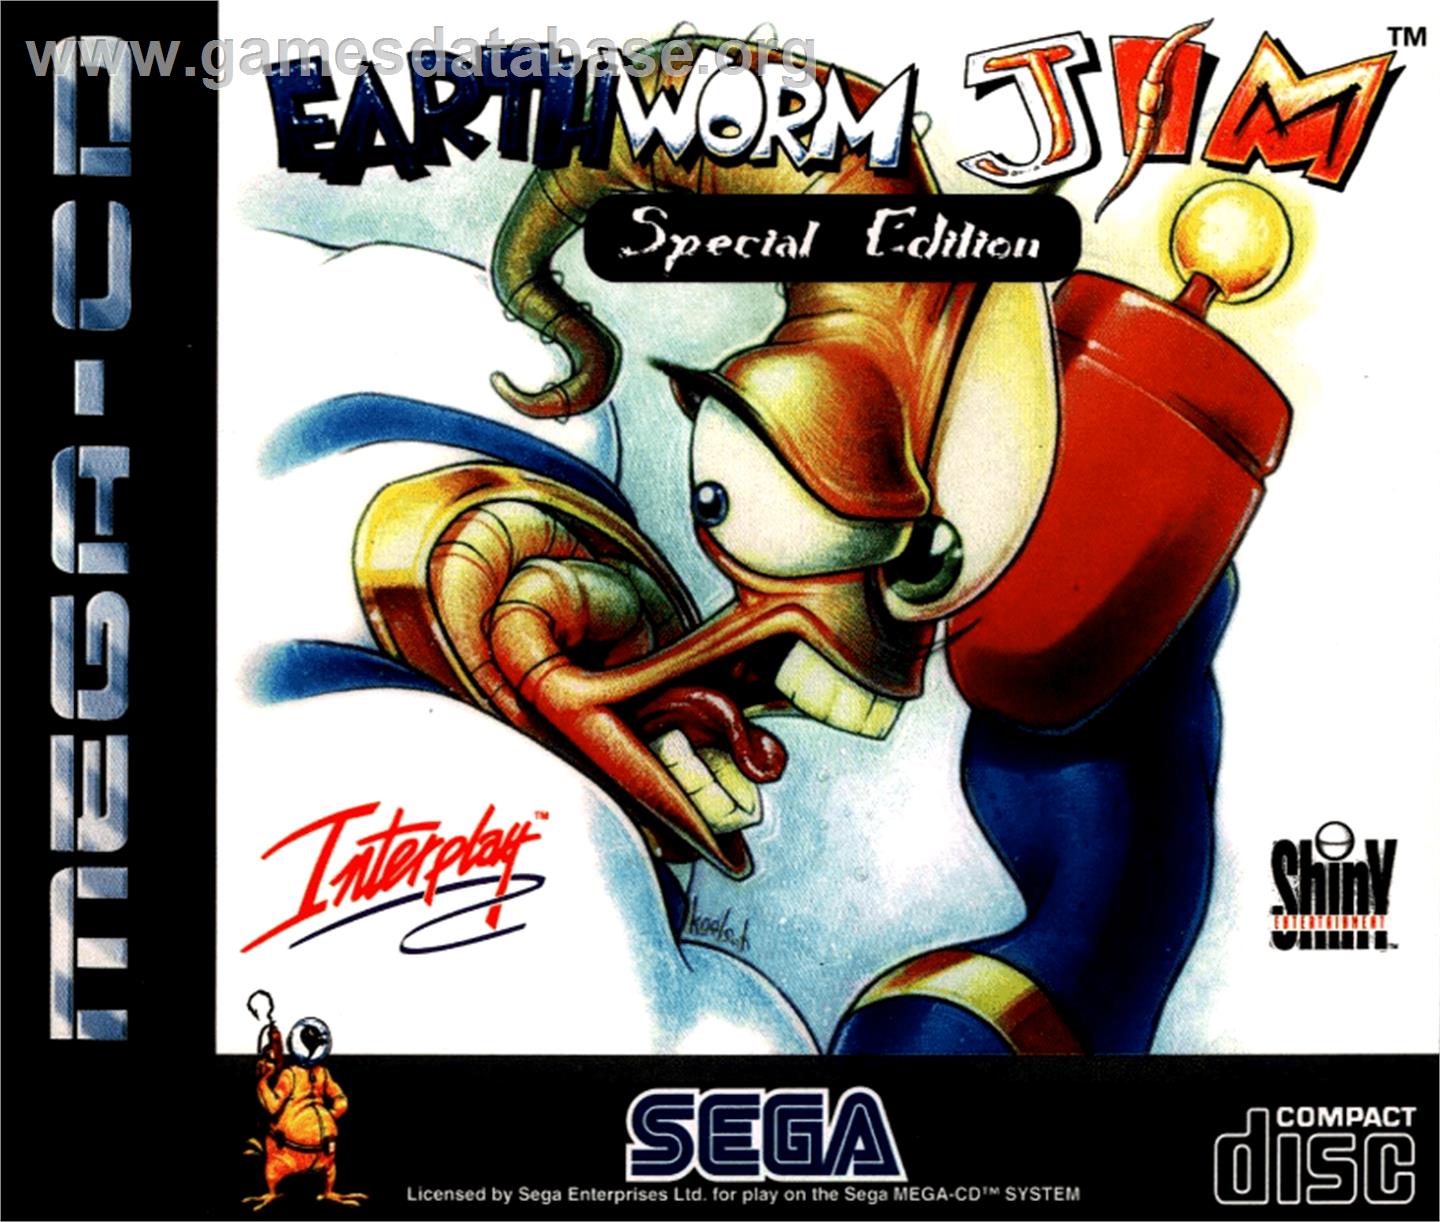 Earthworm Jim Special Edition - Sega CD - Artwork - Box